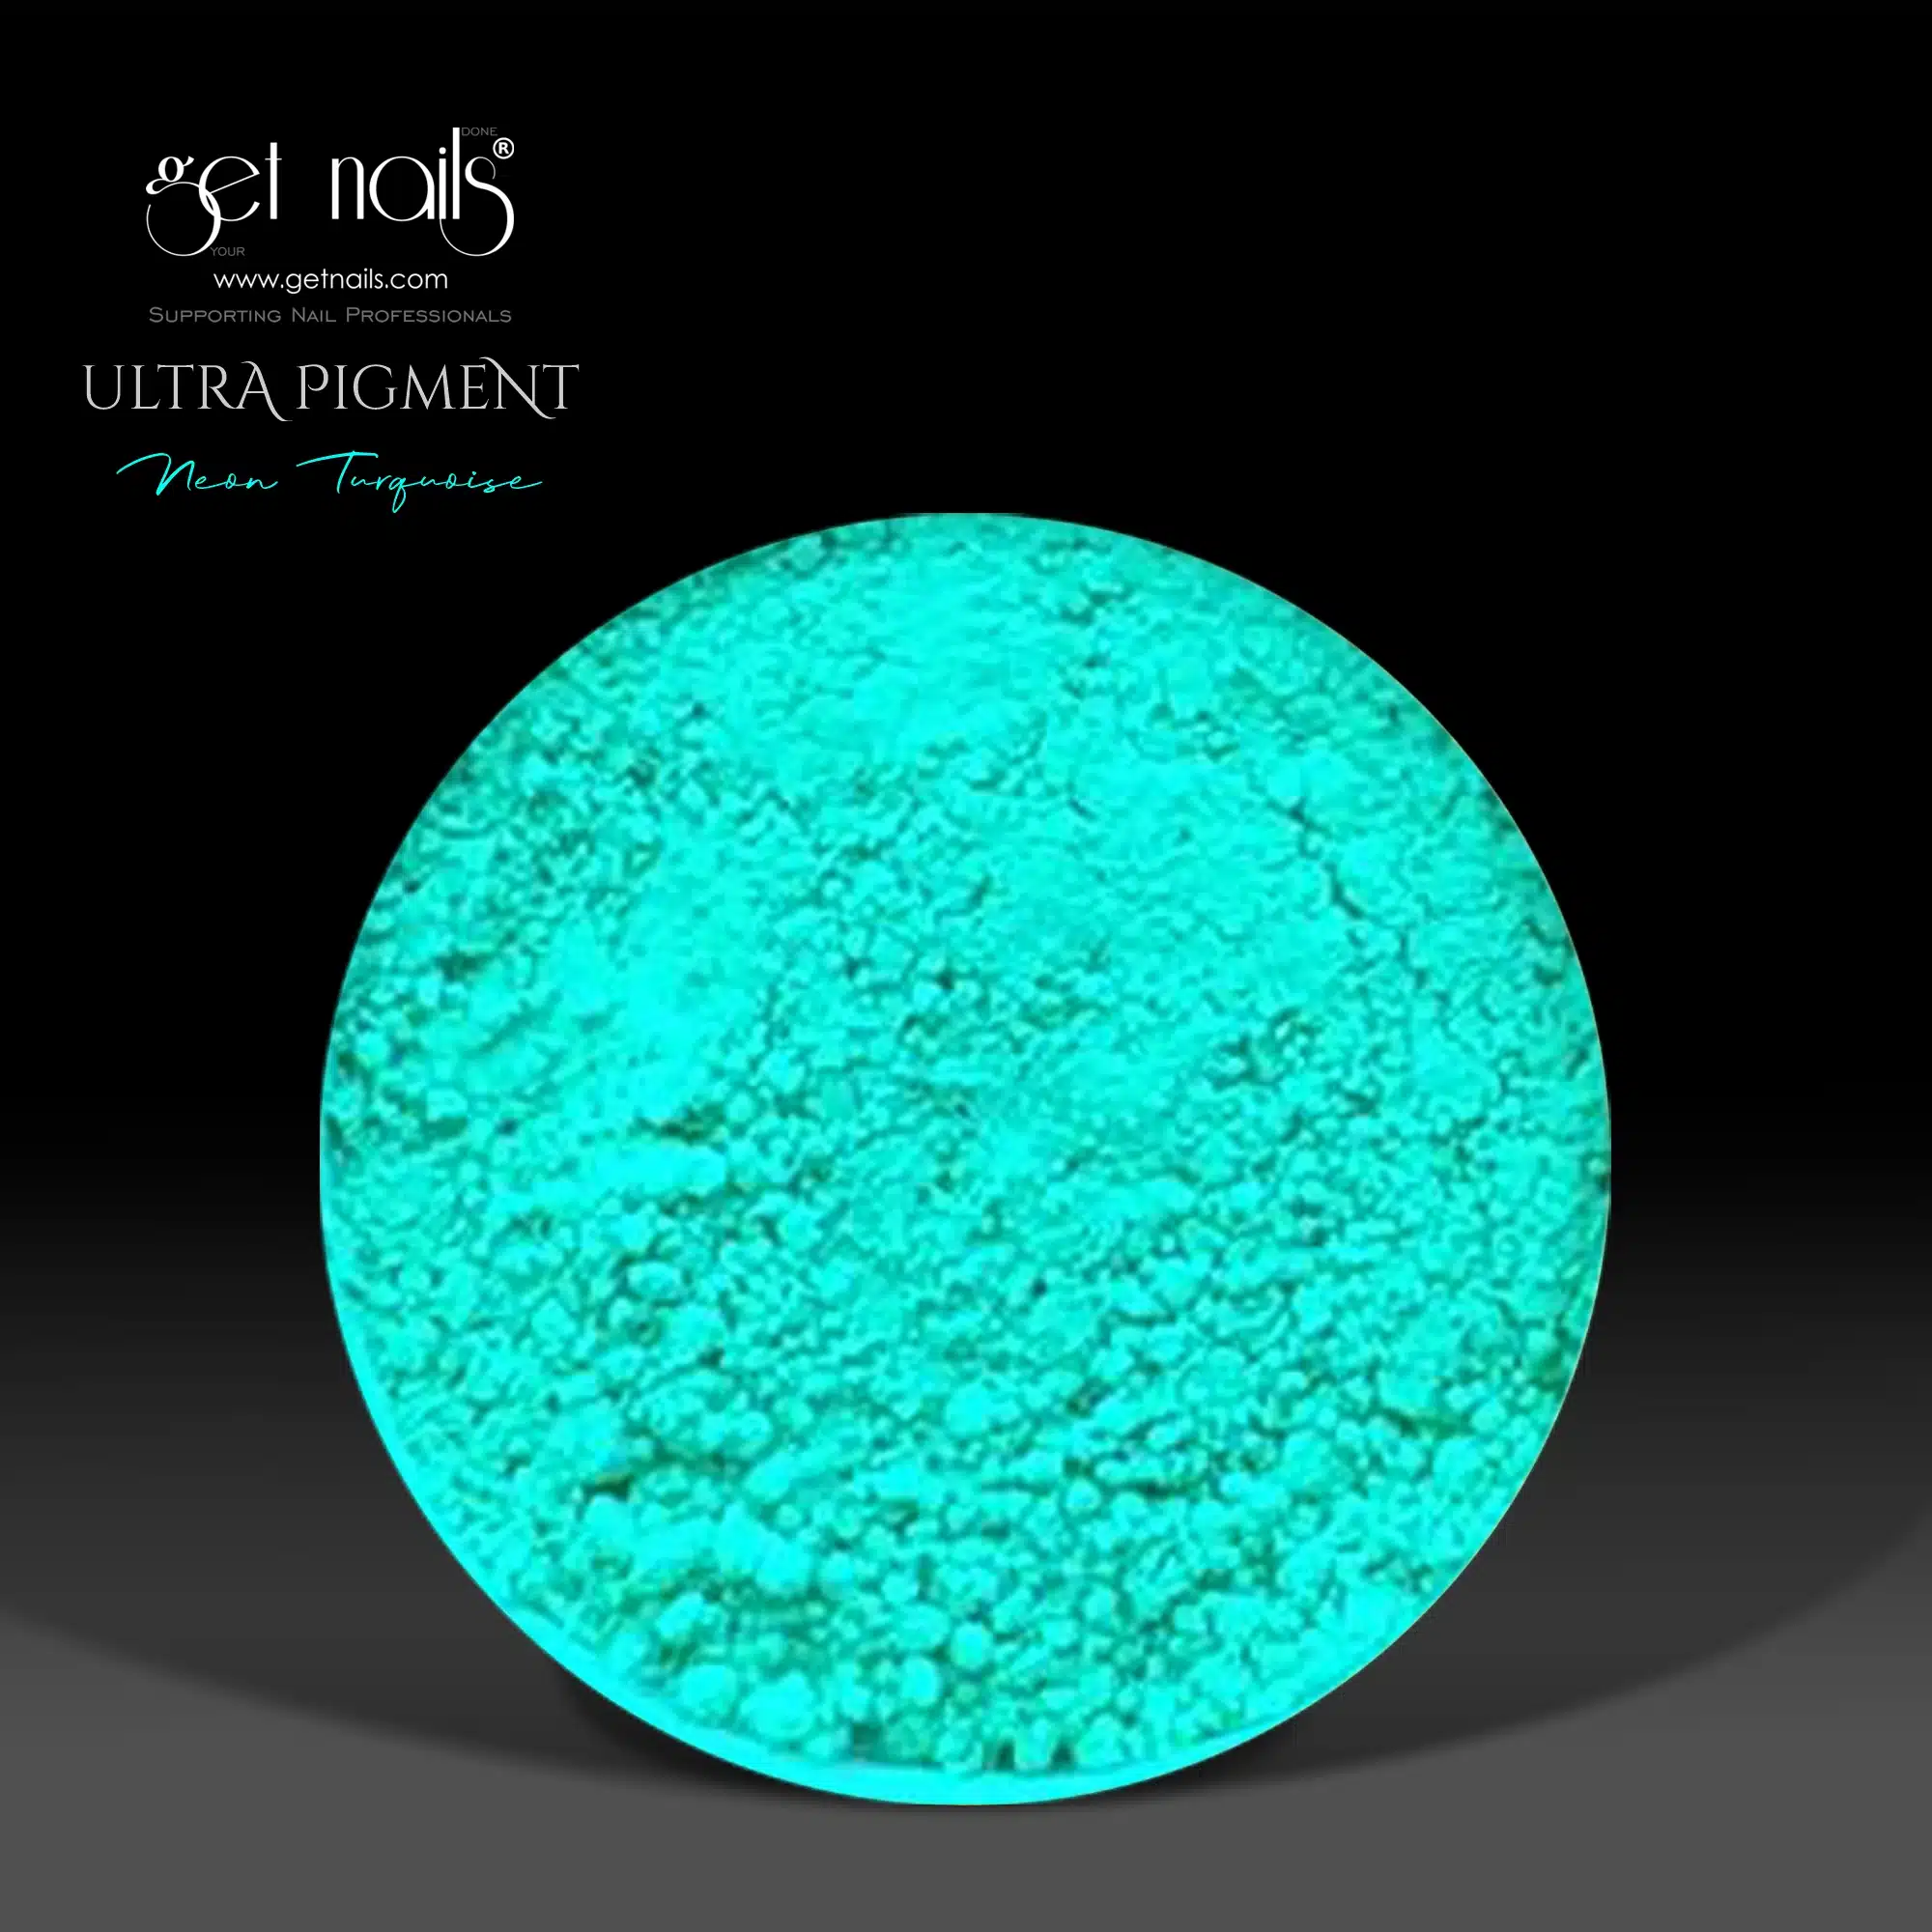 Get Nails Austria - Ultra Pigment Neon Tirkizna 1.5g